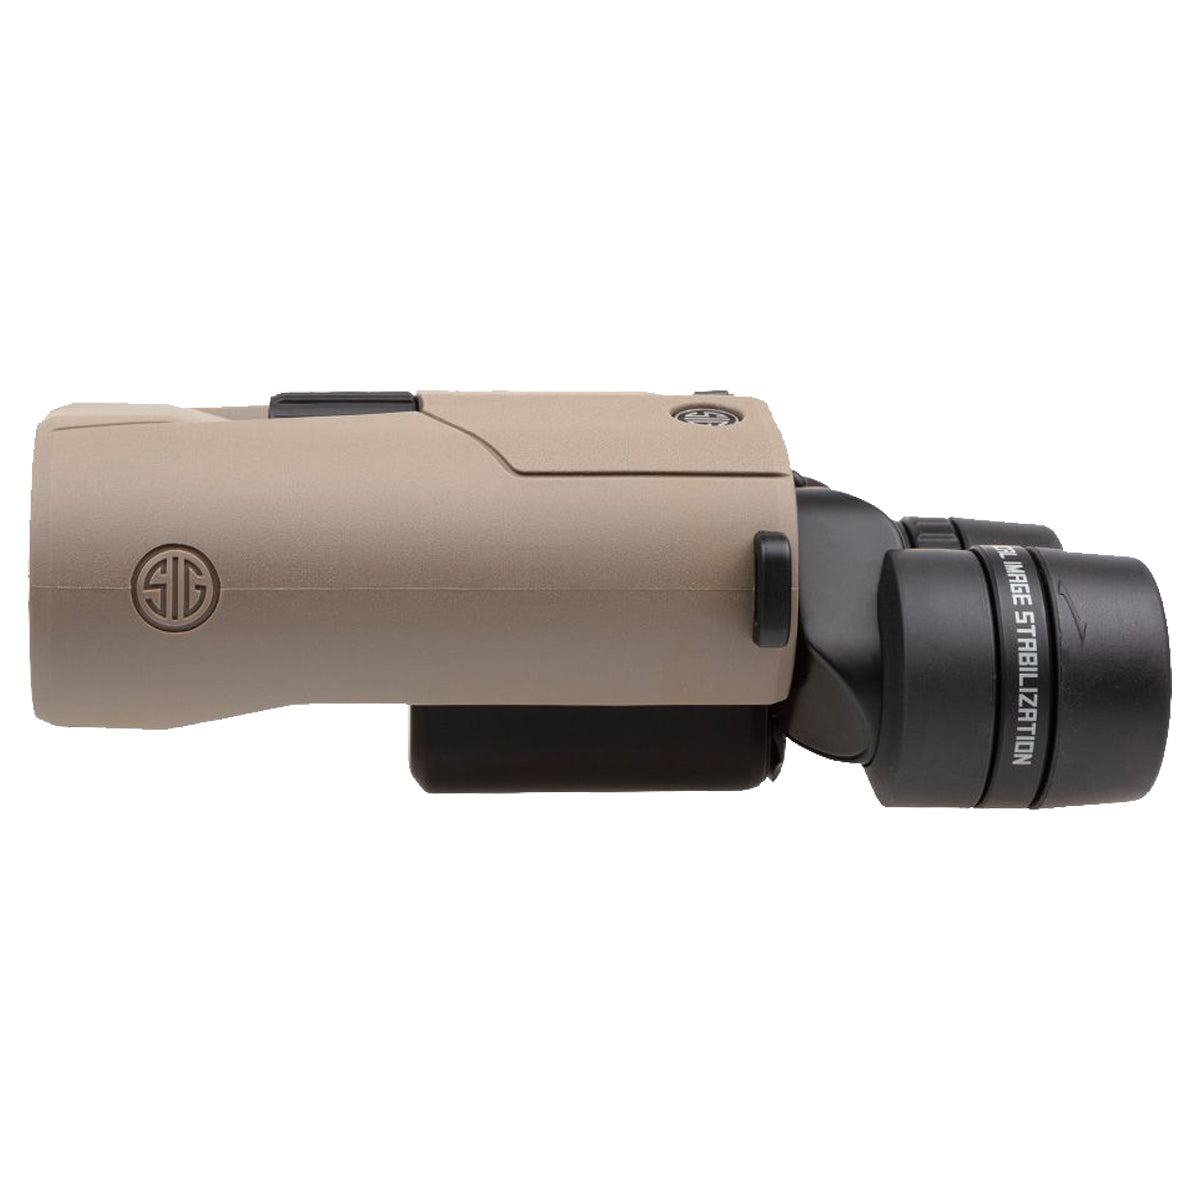 Sig Sauer ZULU6 HDX 12x42mm Image Stabilized Binocular